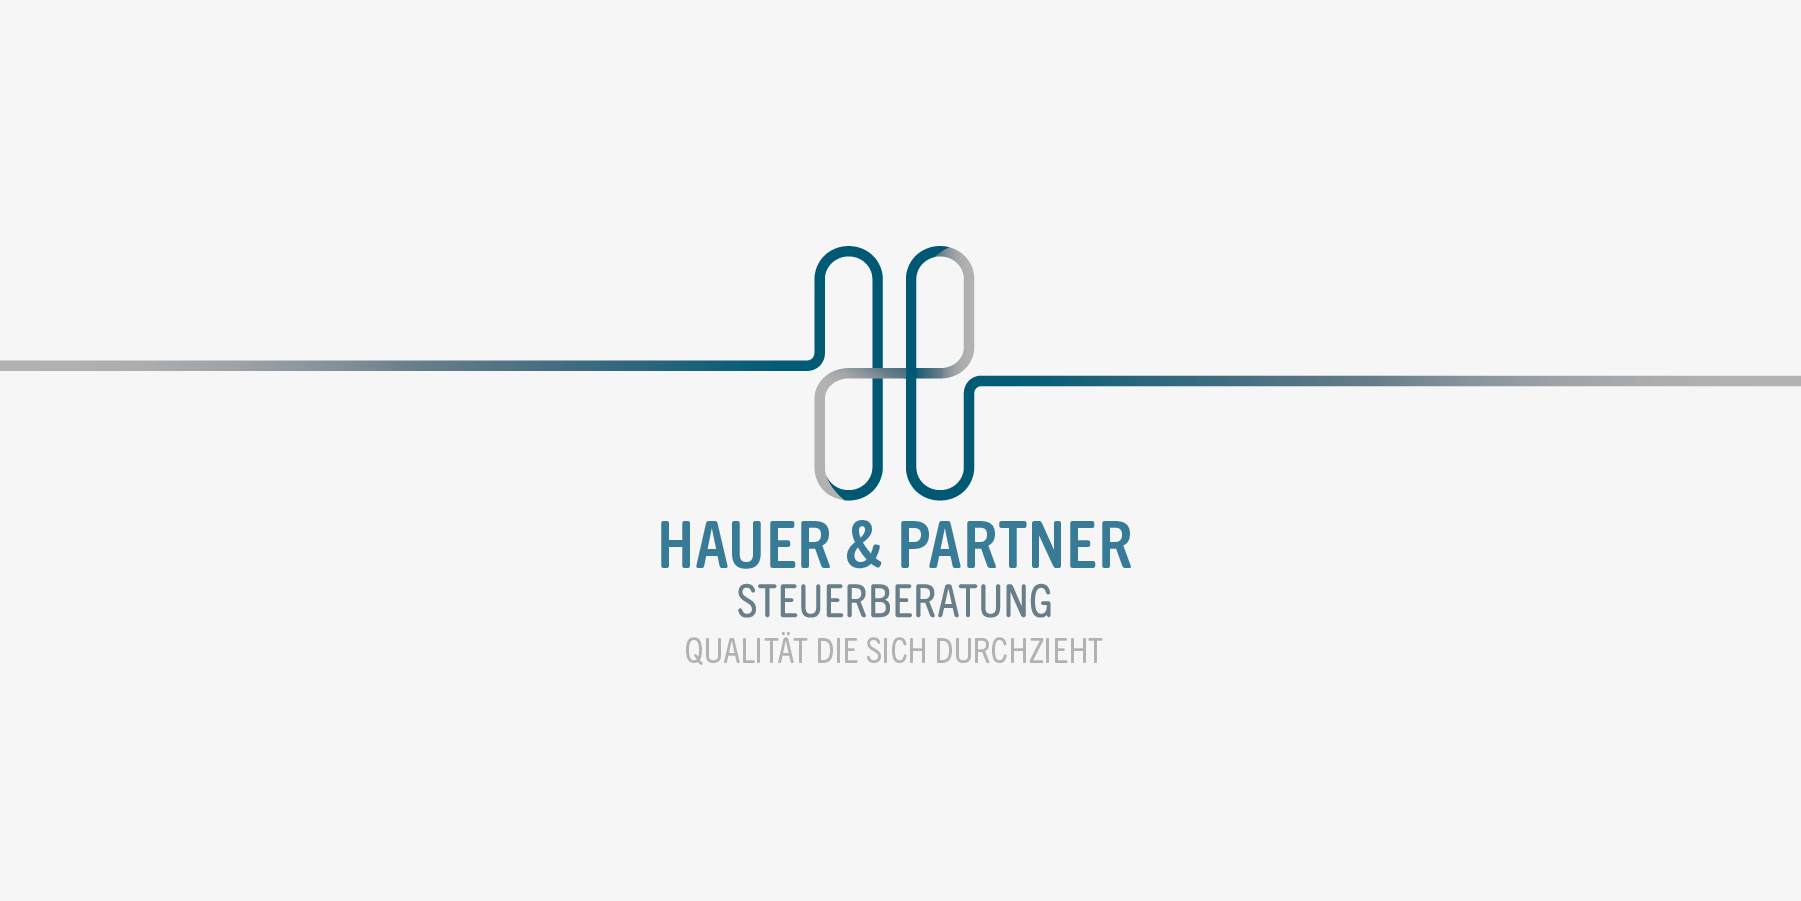 Hauer & Partner Steuerberatung